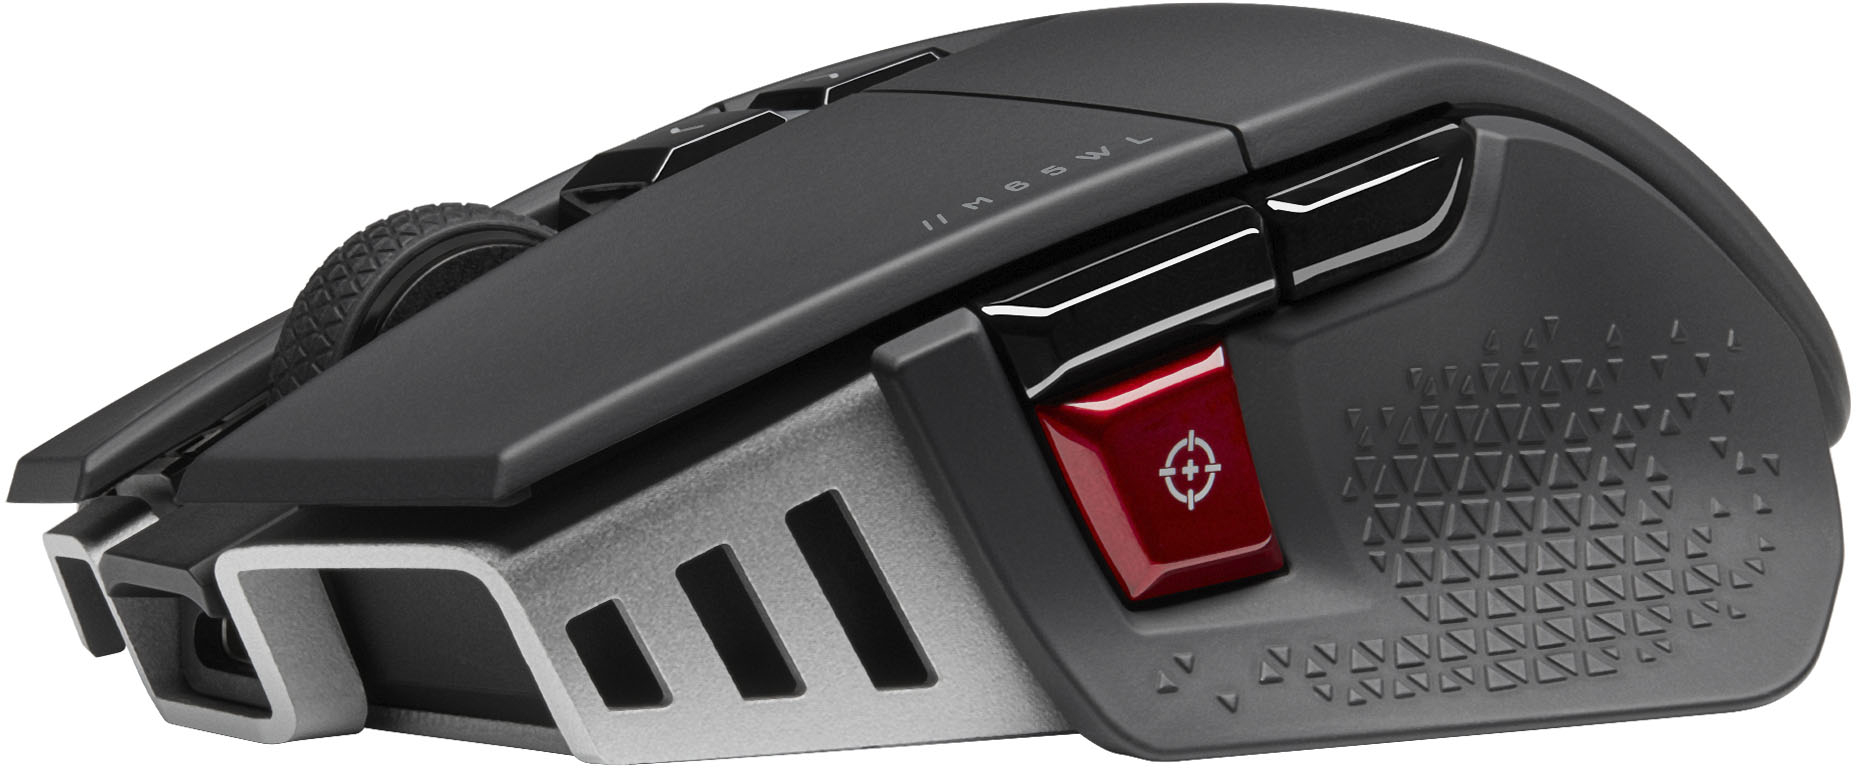 Corsair Gaming M65 RGB Ultra Wireless (Noir) pas cher - HardWare.fr